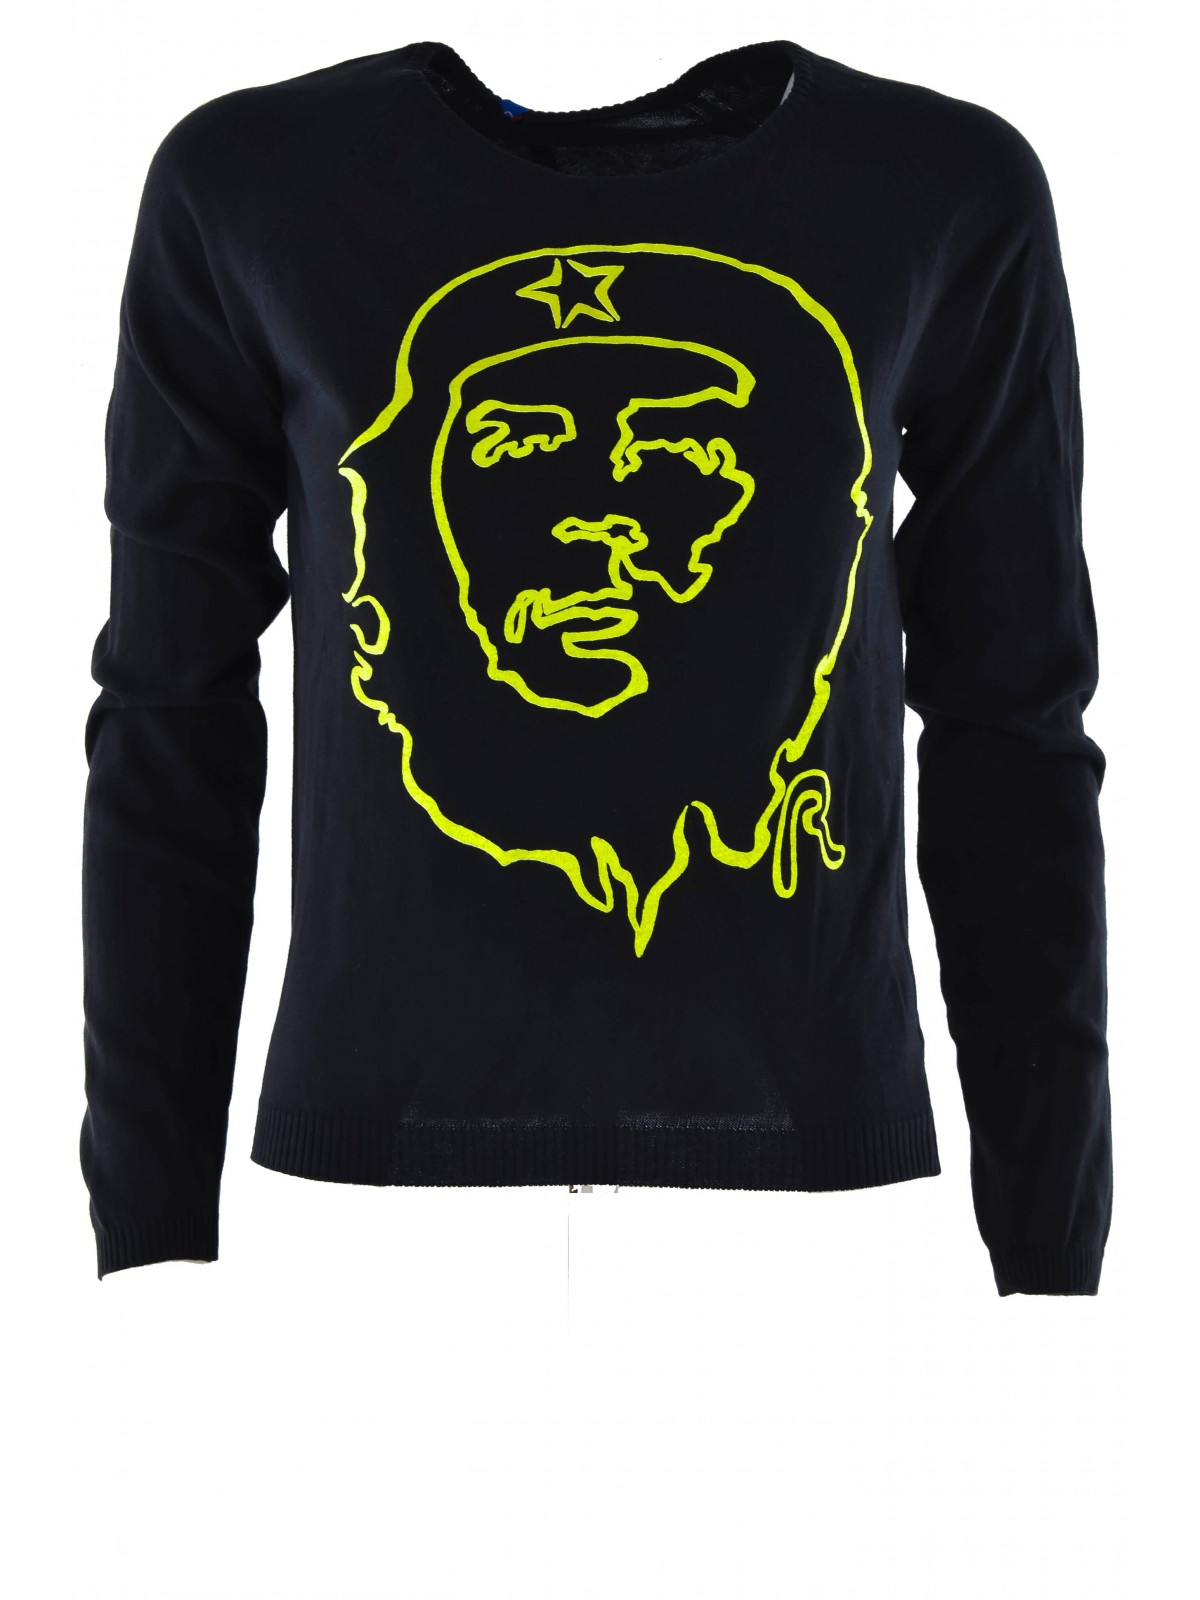 REPLAY Tshirt Long Sleeve che Guevara, Black